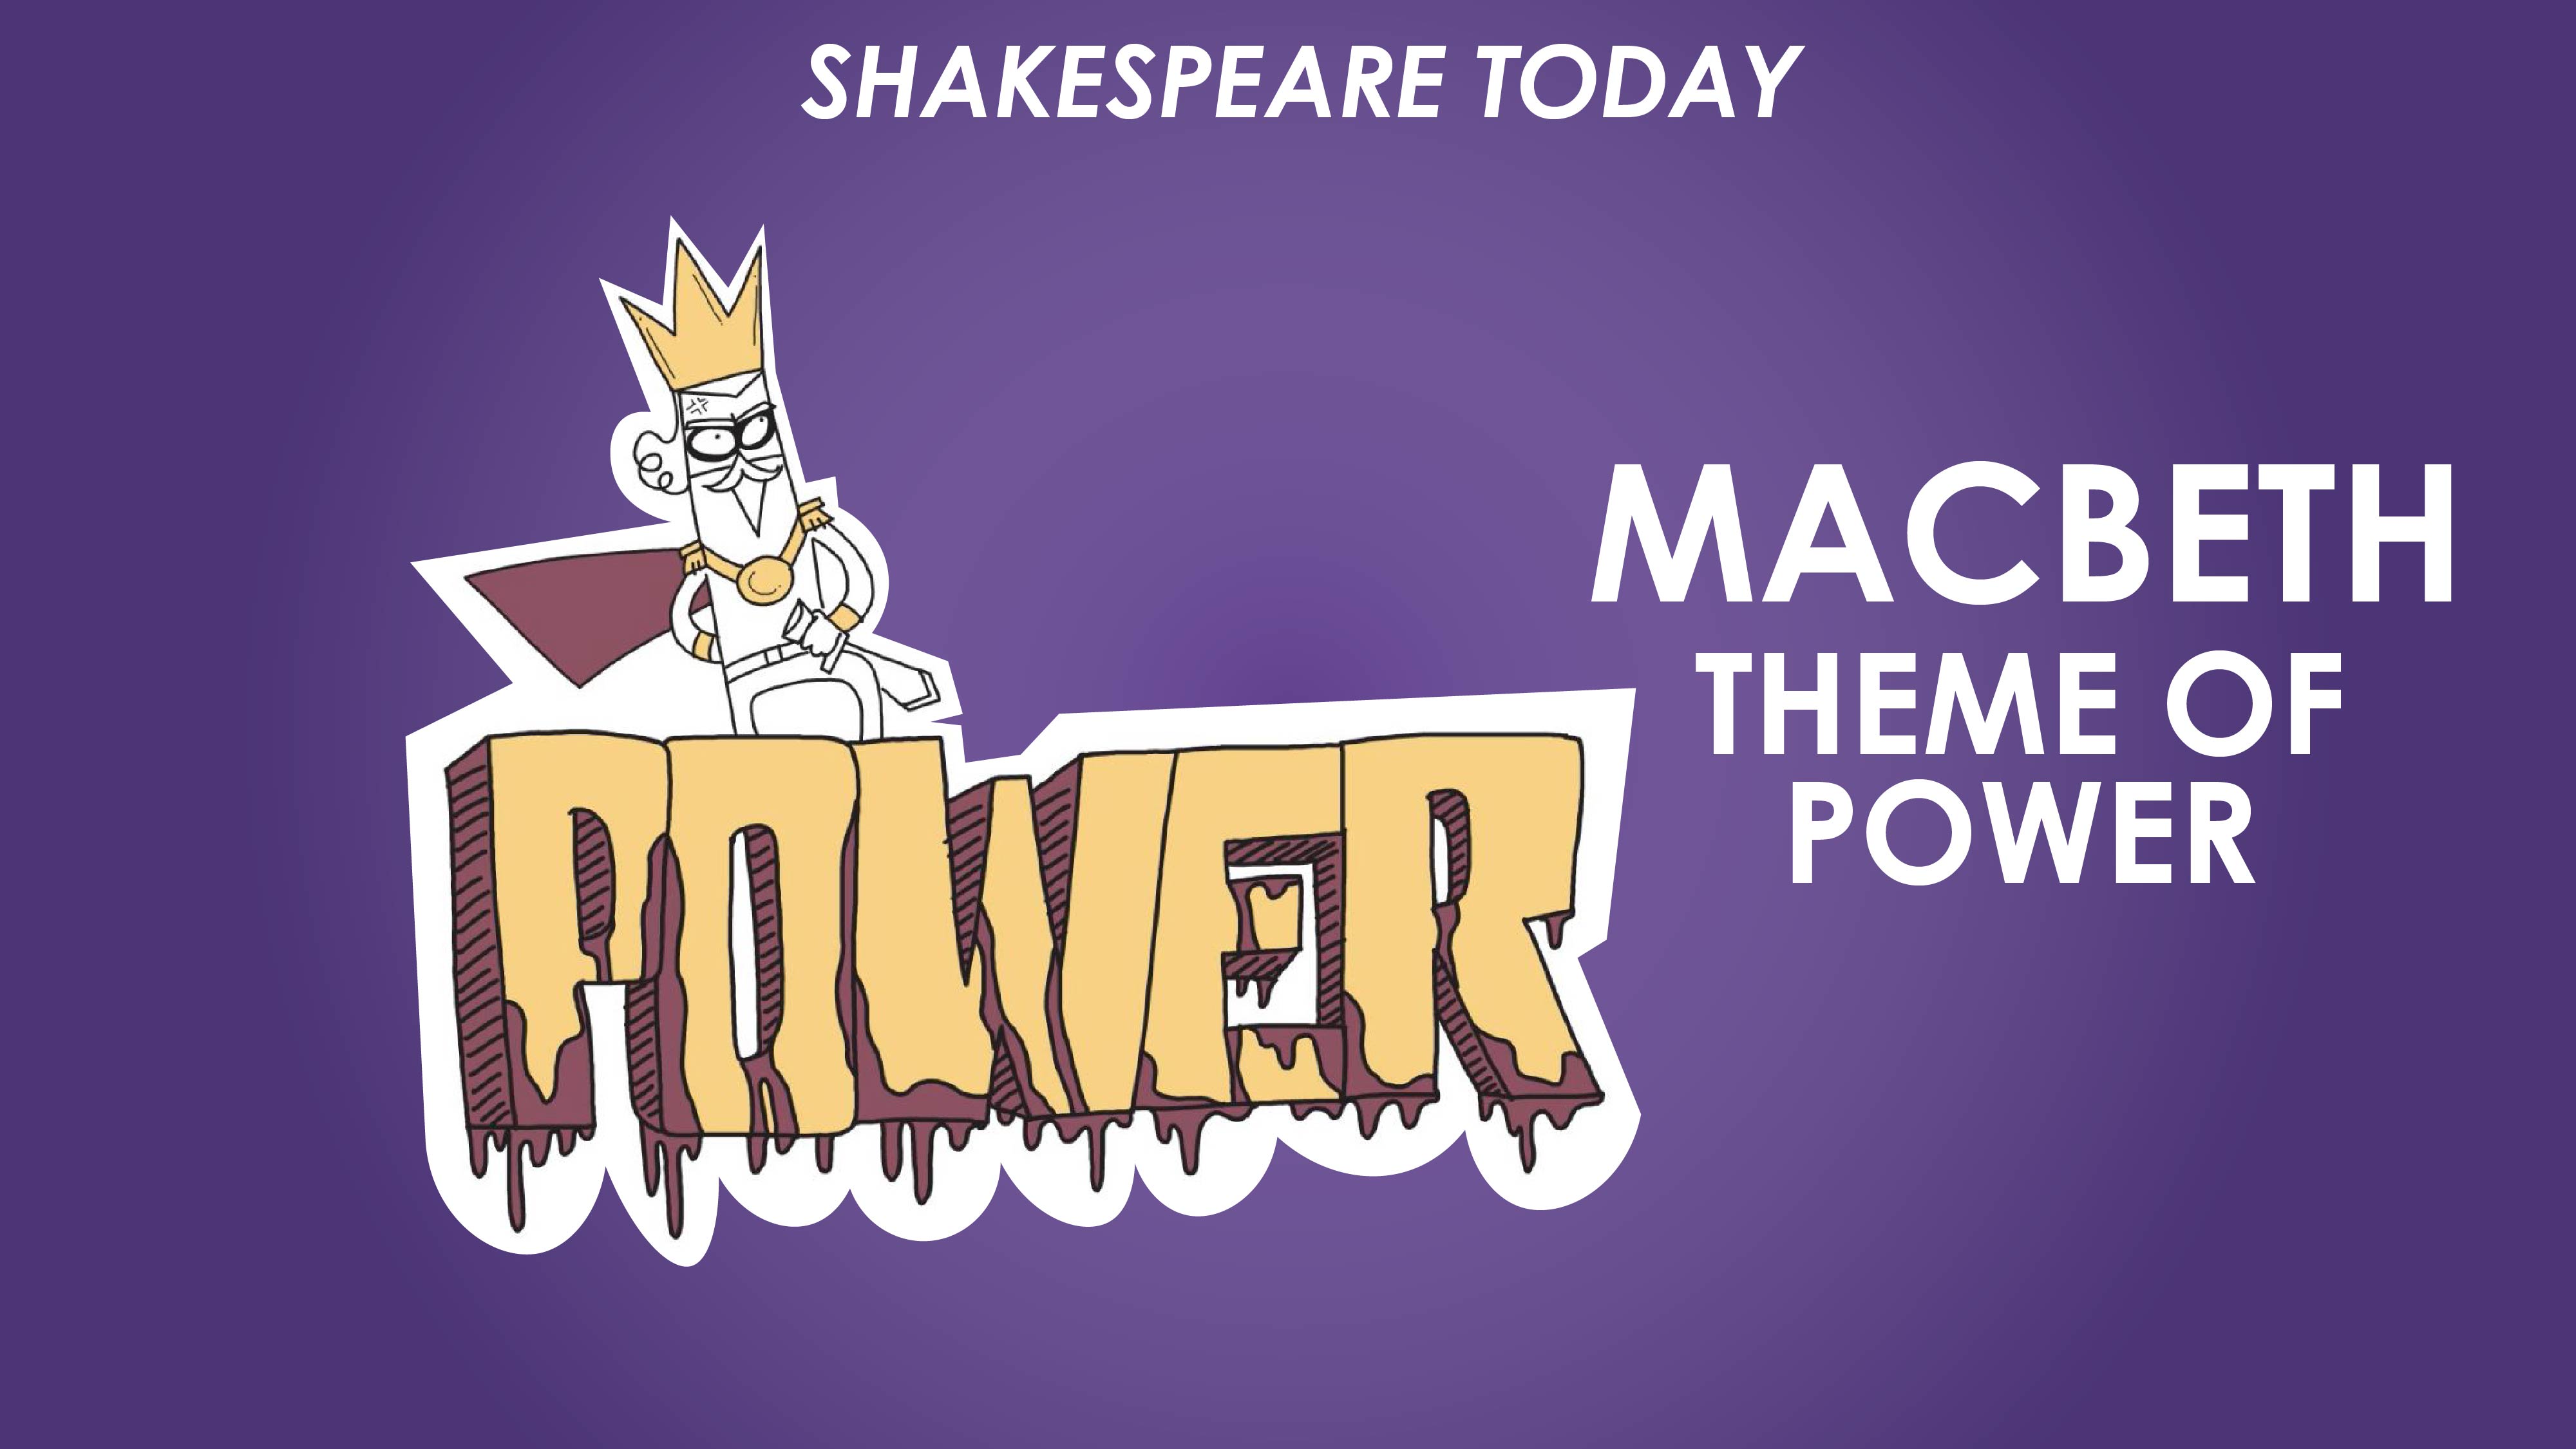 Macbeth Theme of Power - Shakespeare Today Series